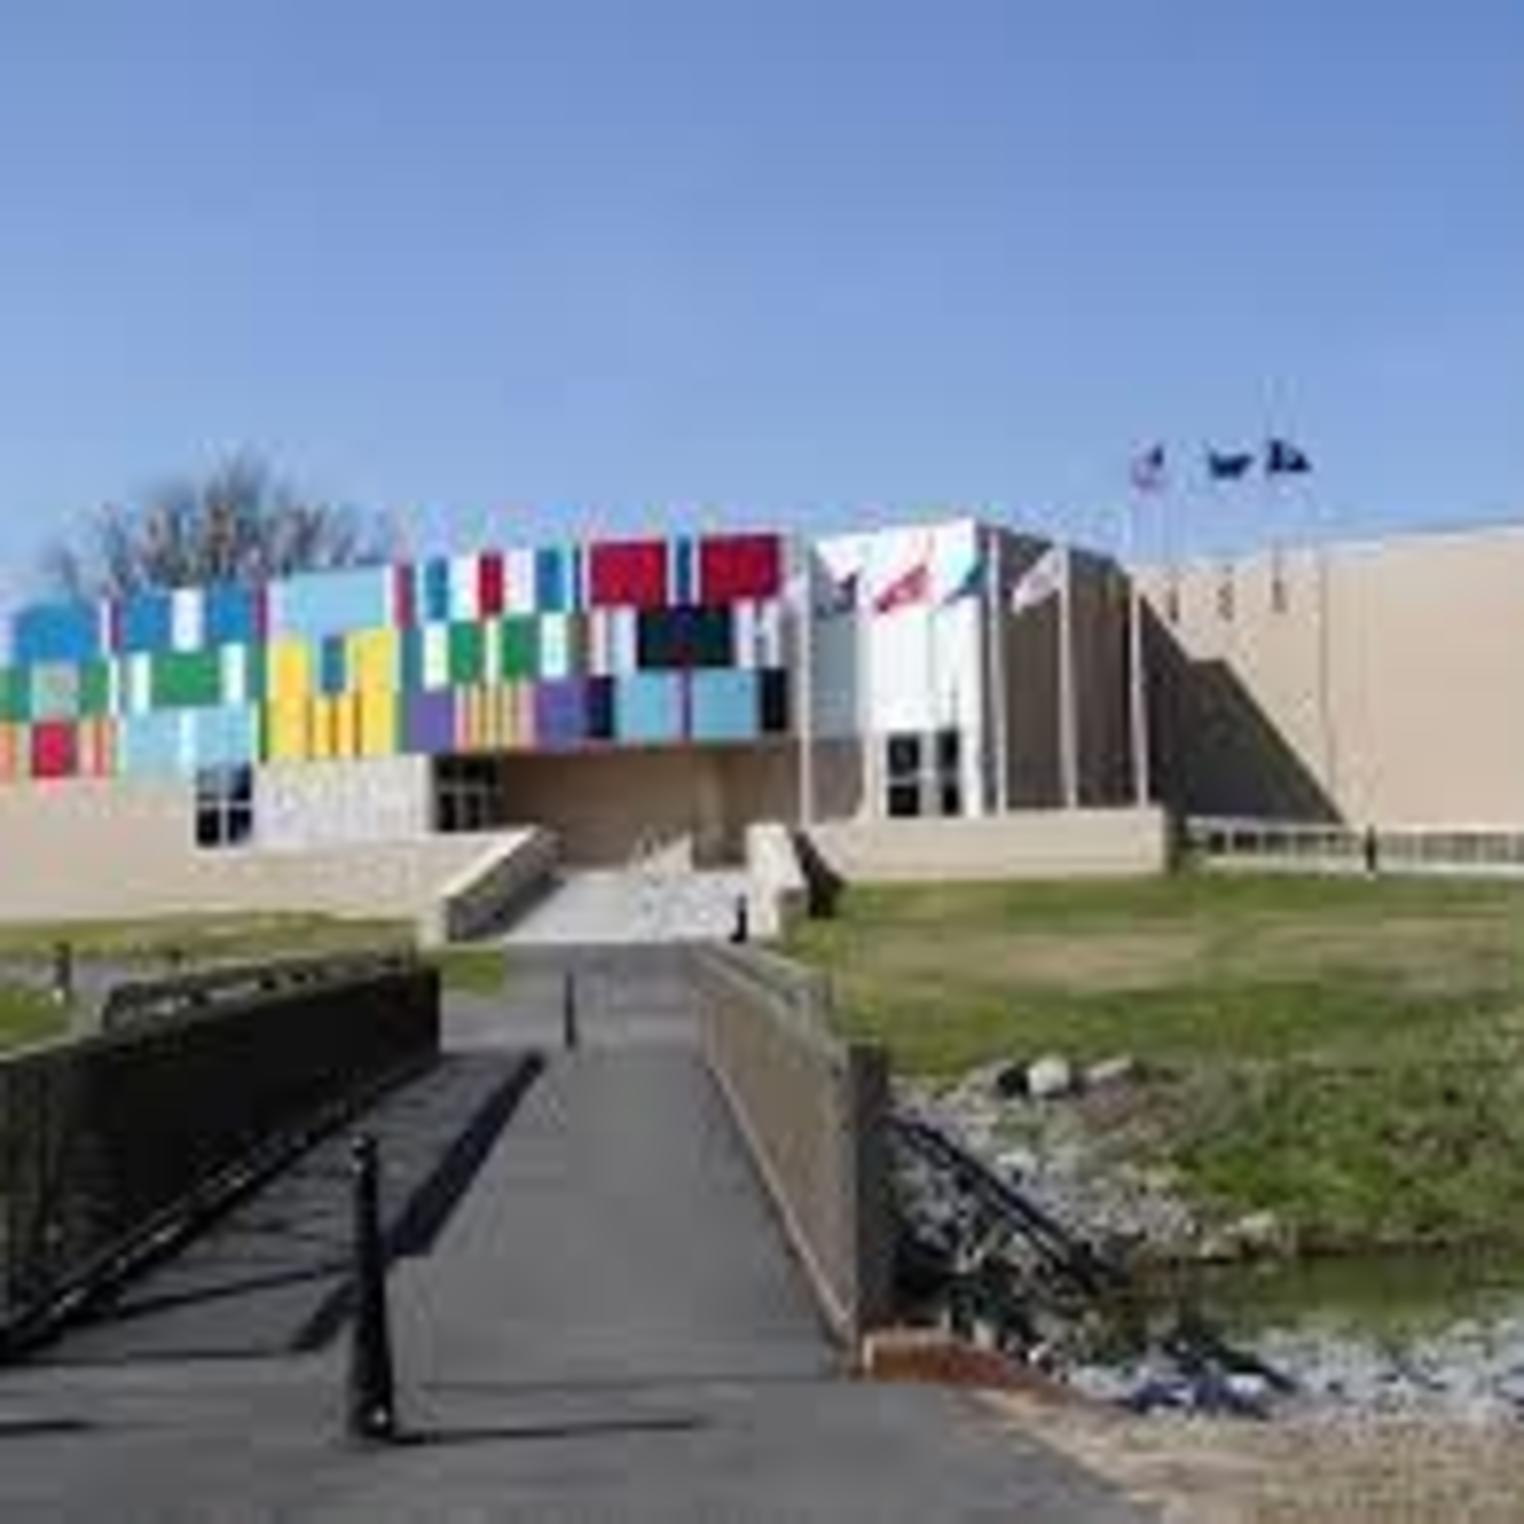 Pennsylvania Military Museum